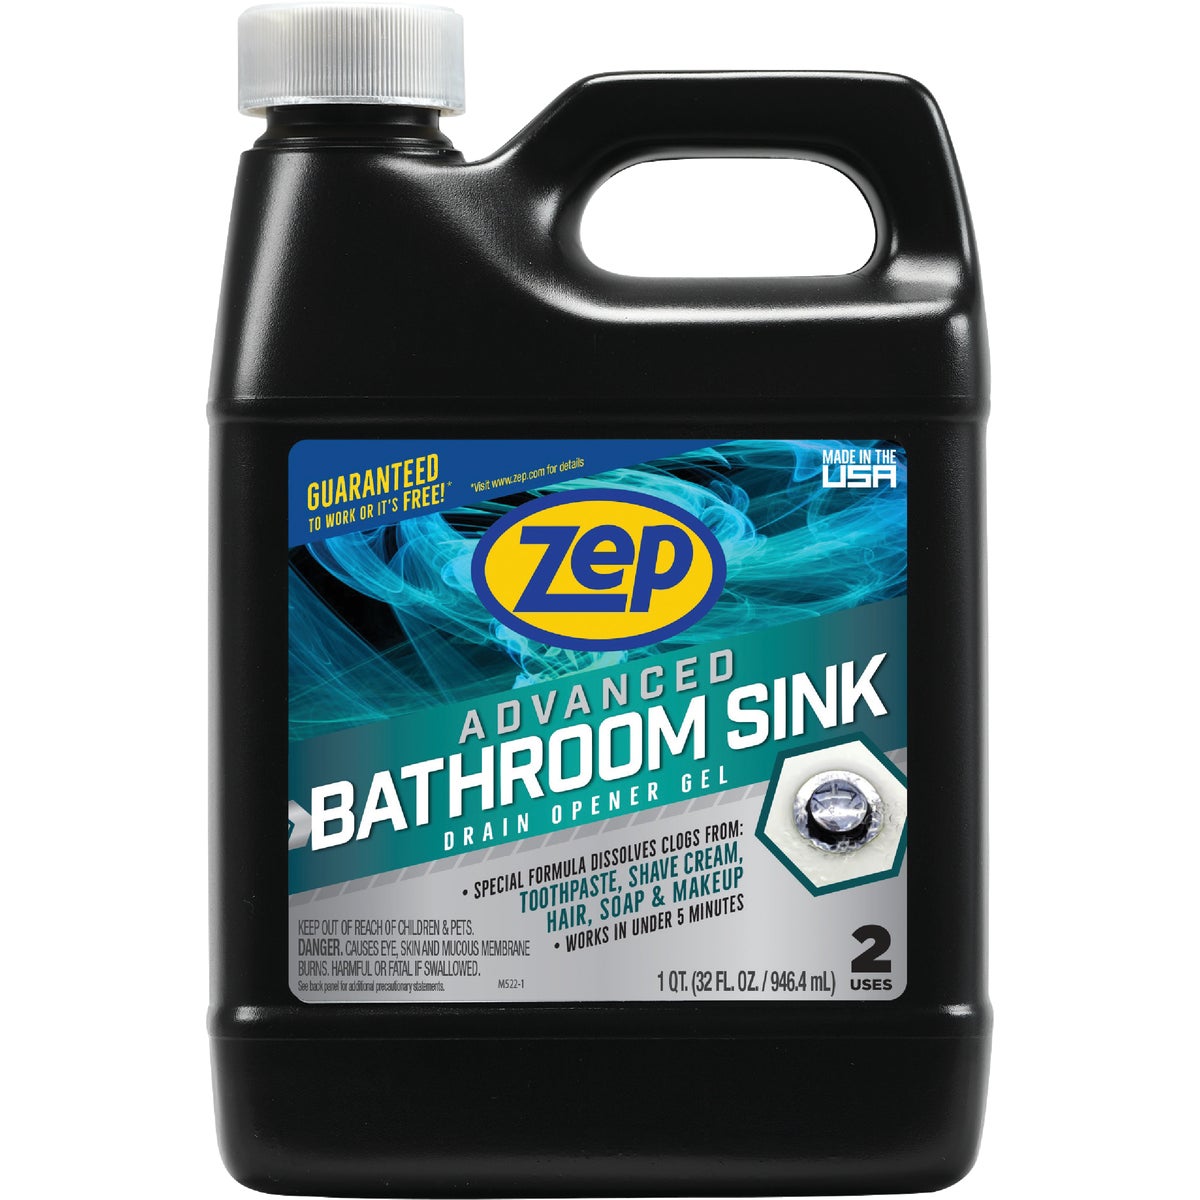 Zep 32 Oz. Advanced Bathroom Sink Drain Opener